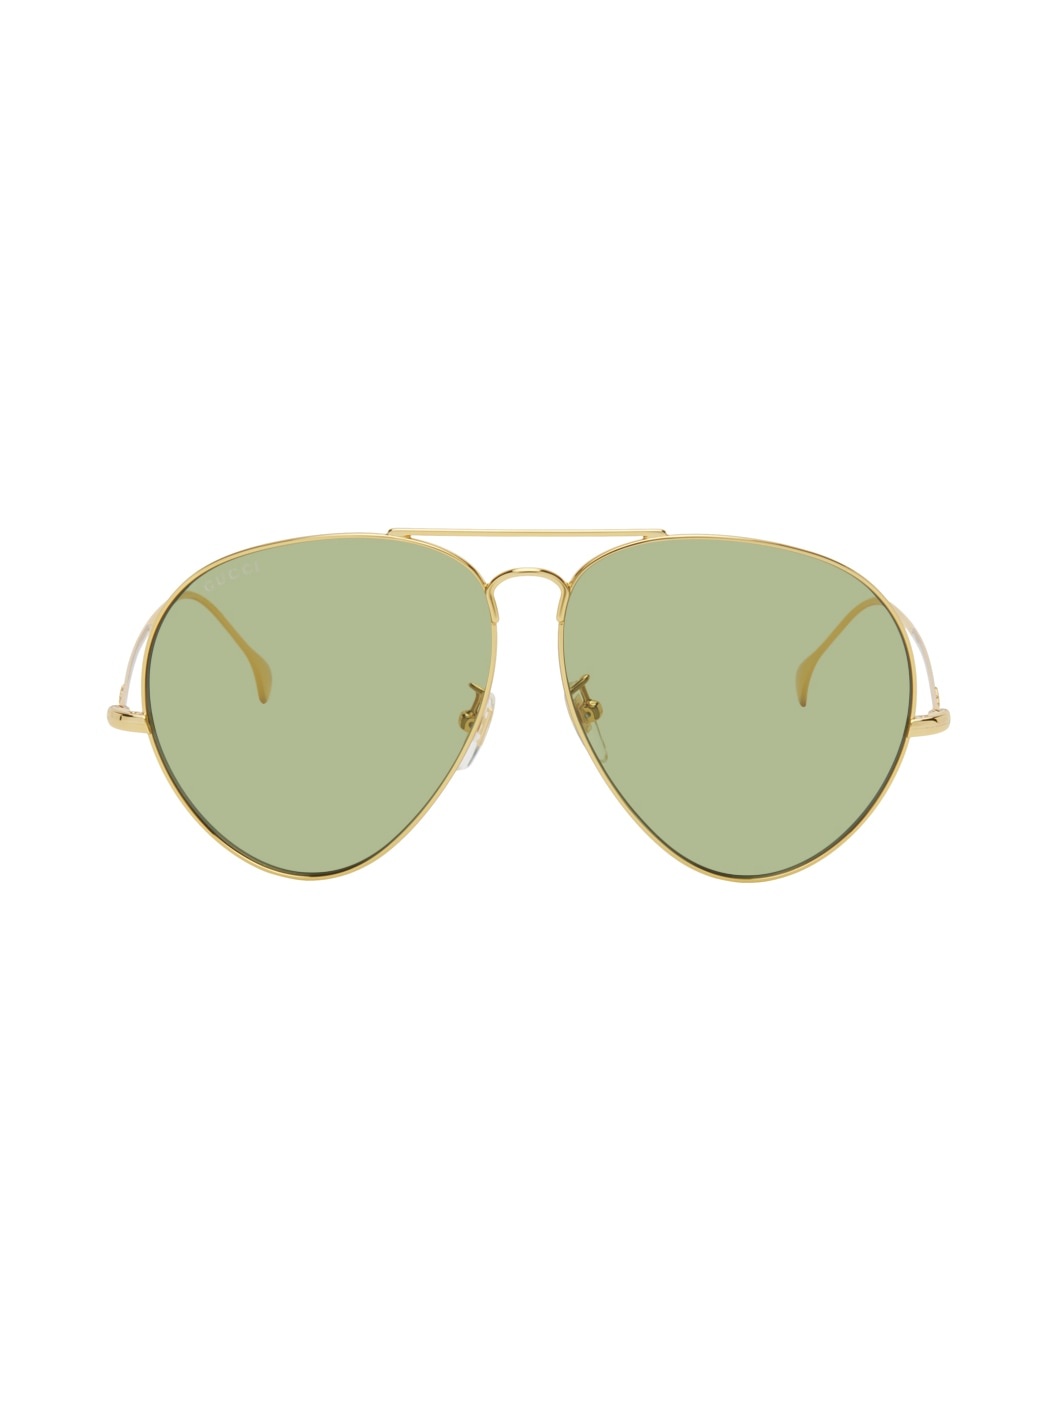 Gold Aviator Sunglasses - 1